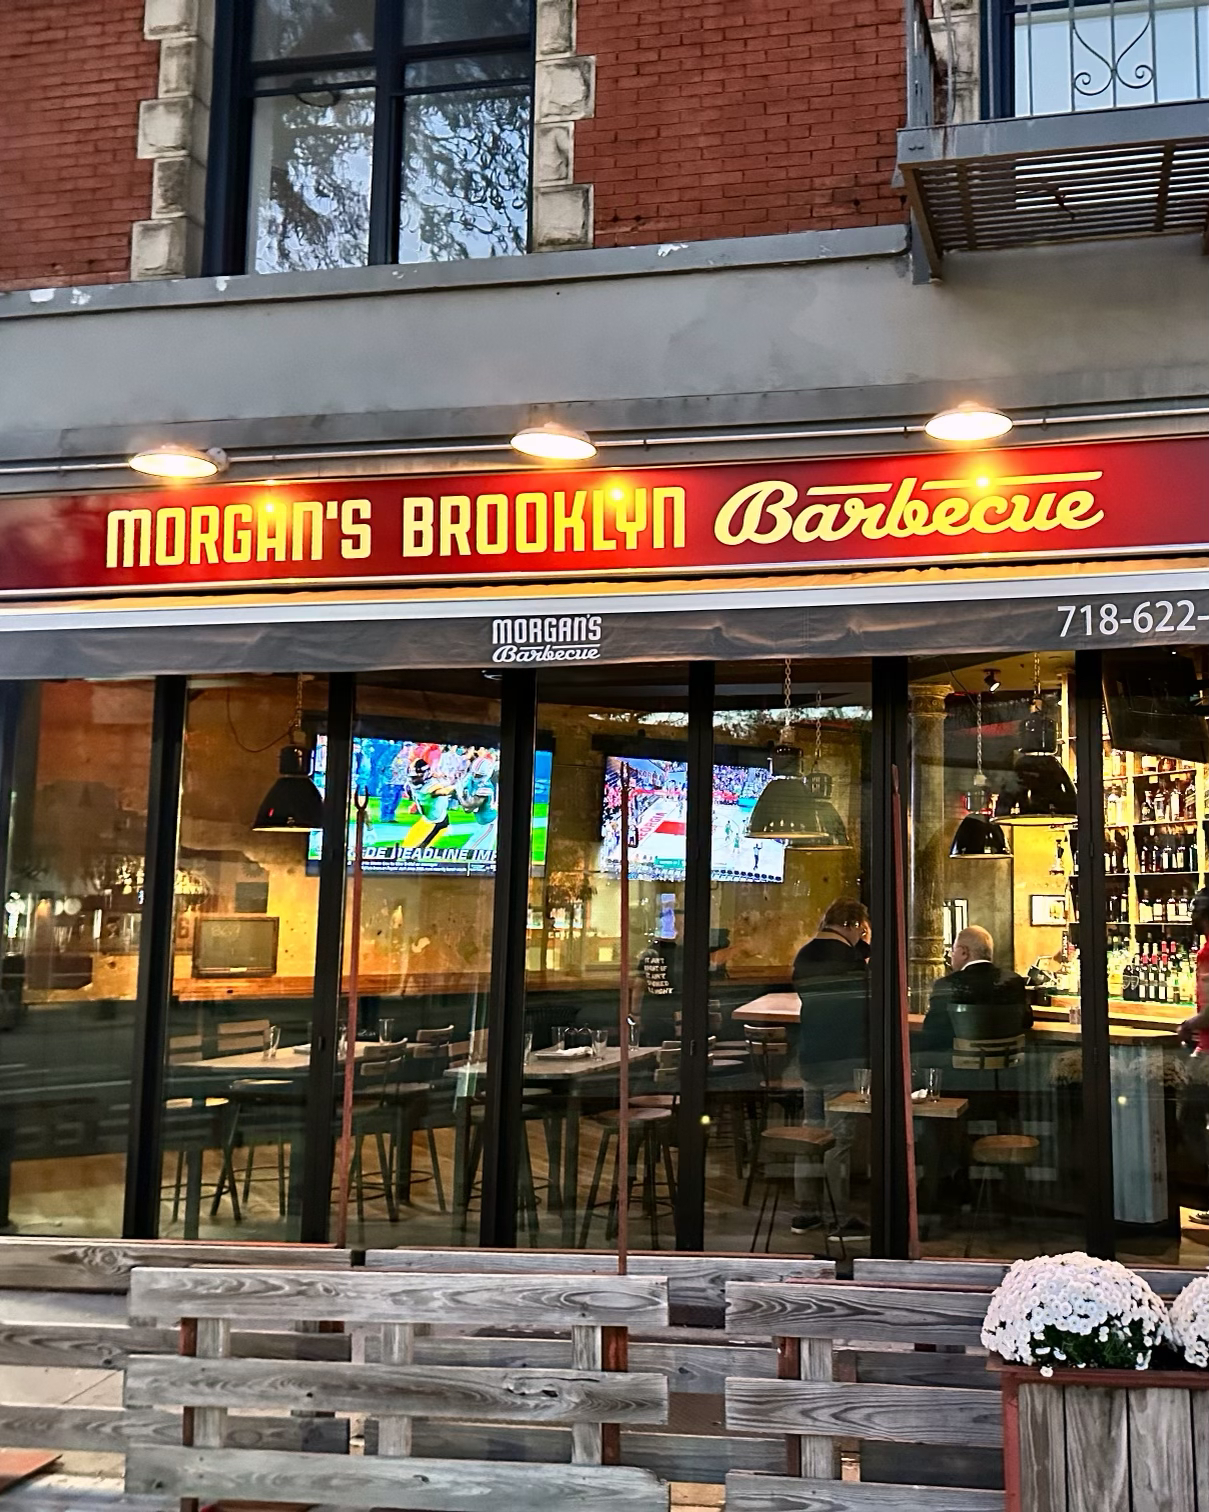 Morgan's Brooklyn Barbecue